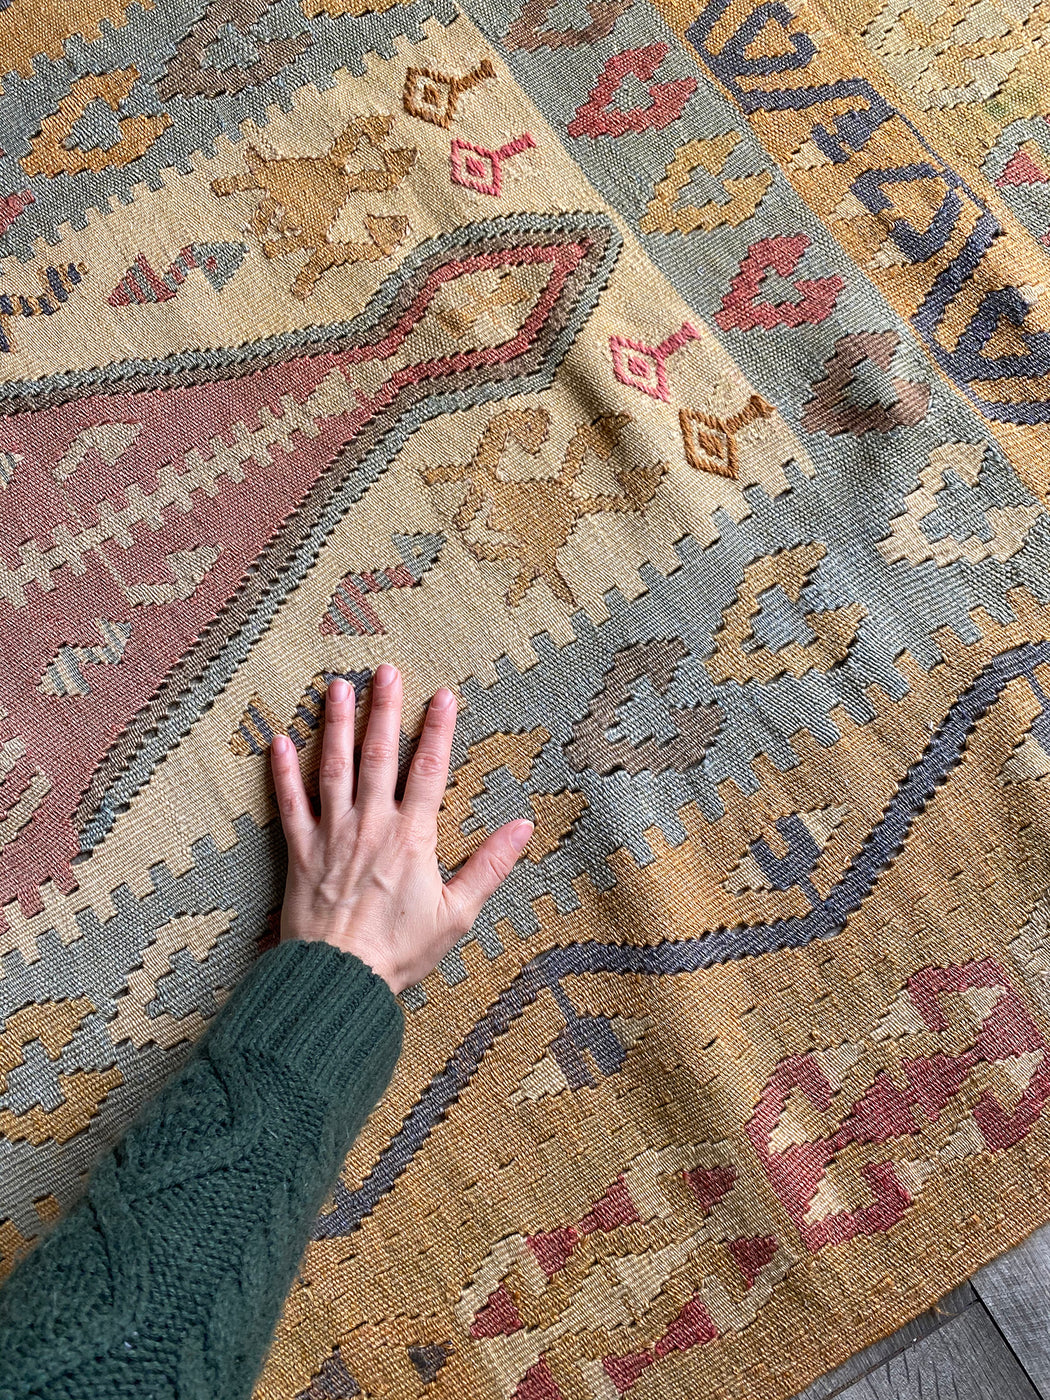 3’ 4” x 5’ 7” Vintage Turkish Kilim Prayer Rug